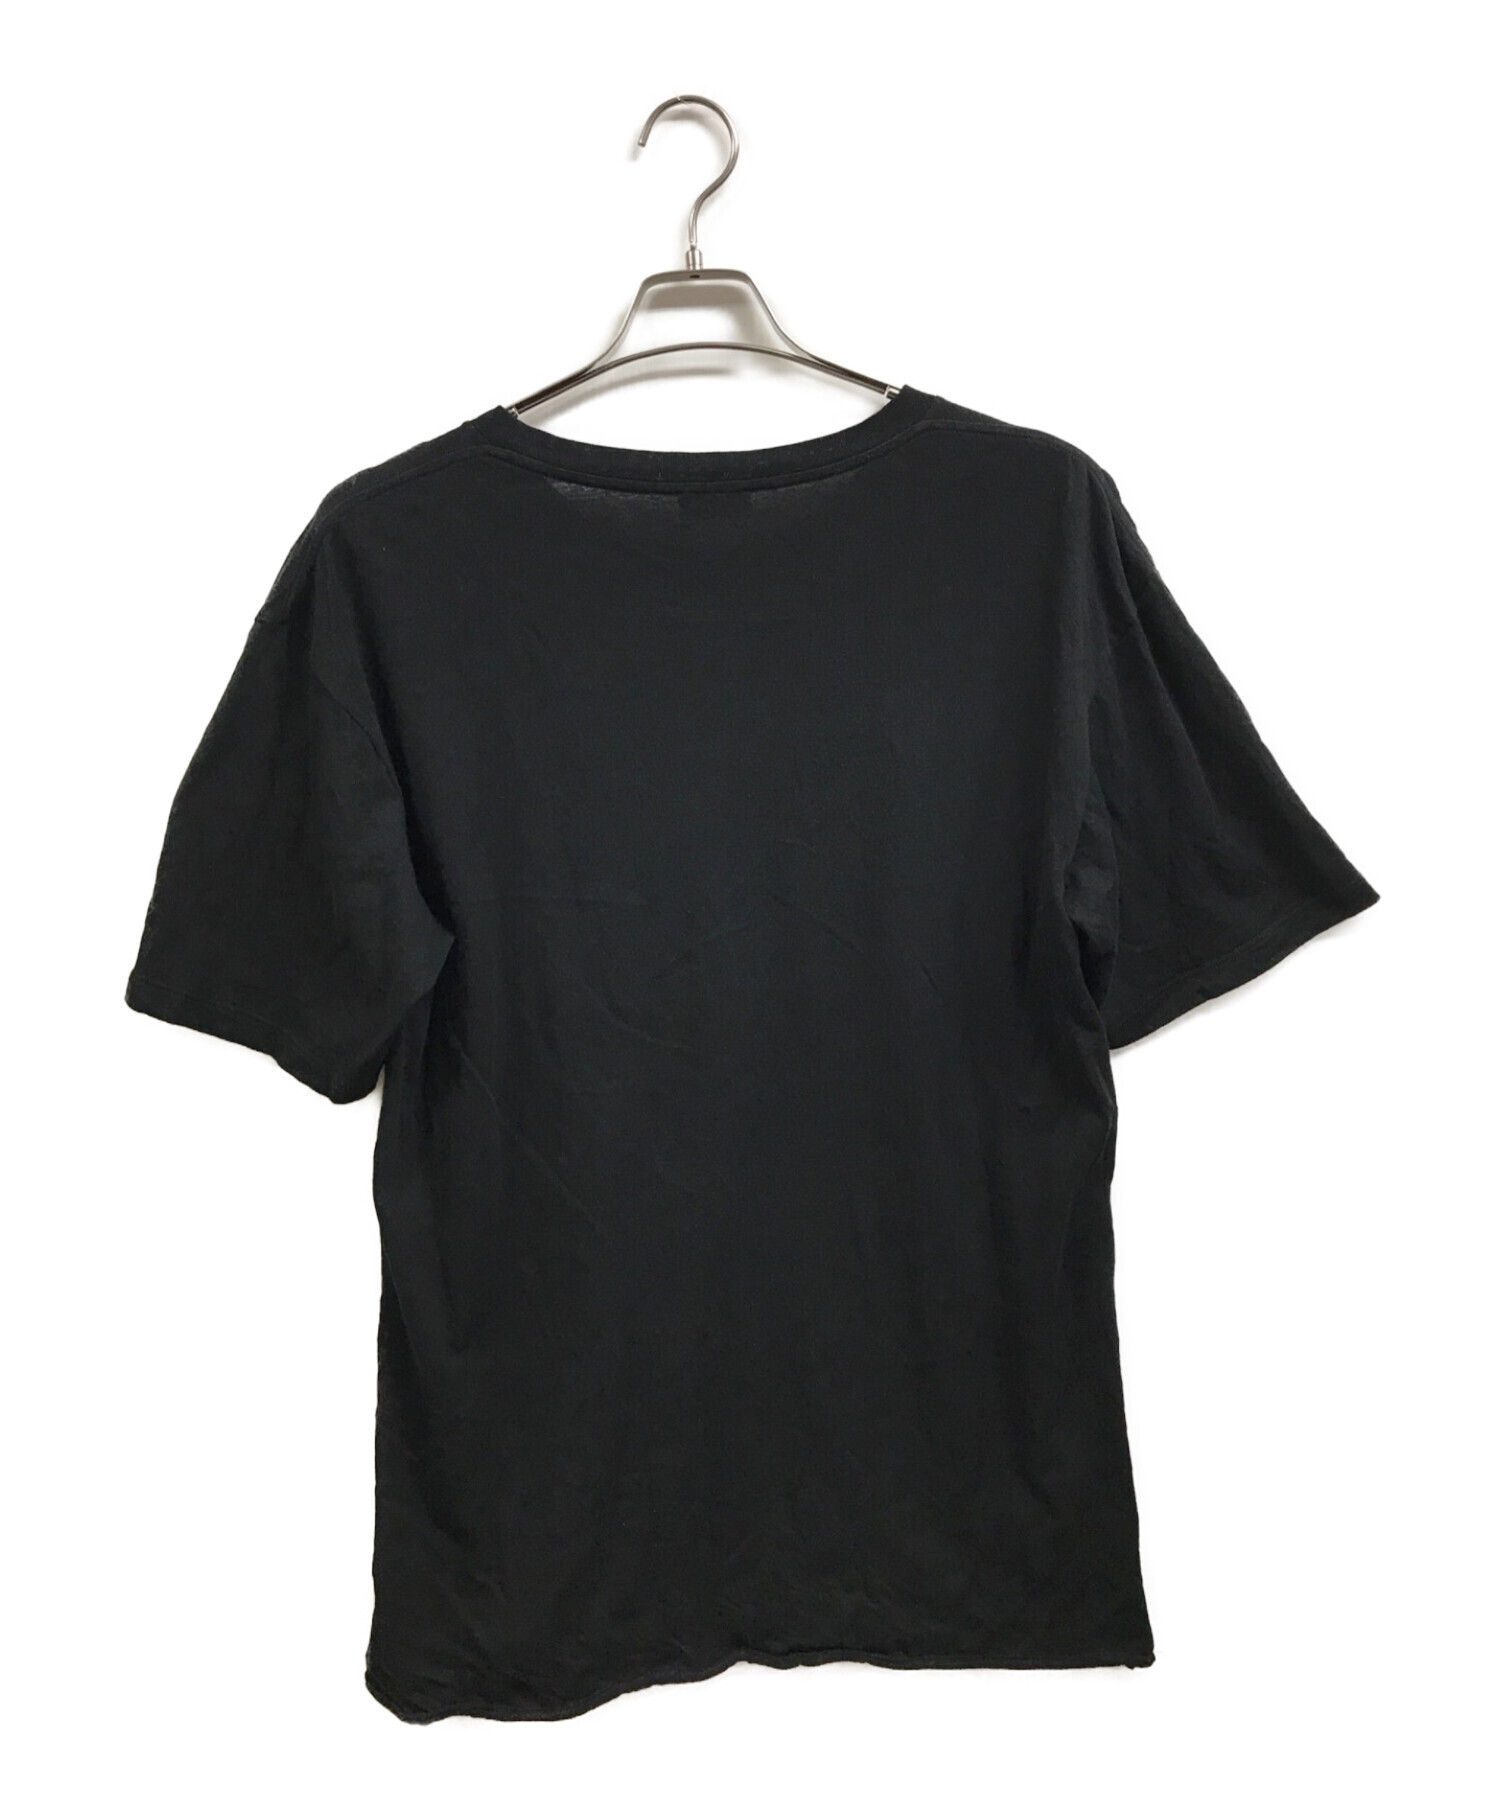 Saint Laurent Paris (サンローランパリ) ロゴプリントTシャツ ブラック サイズ:S